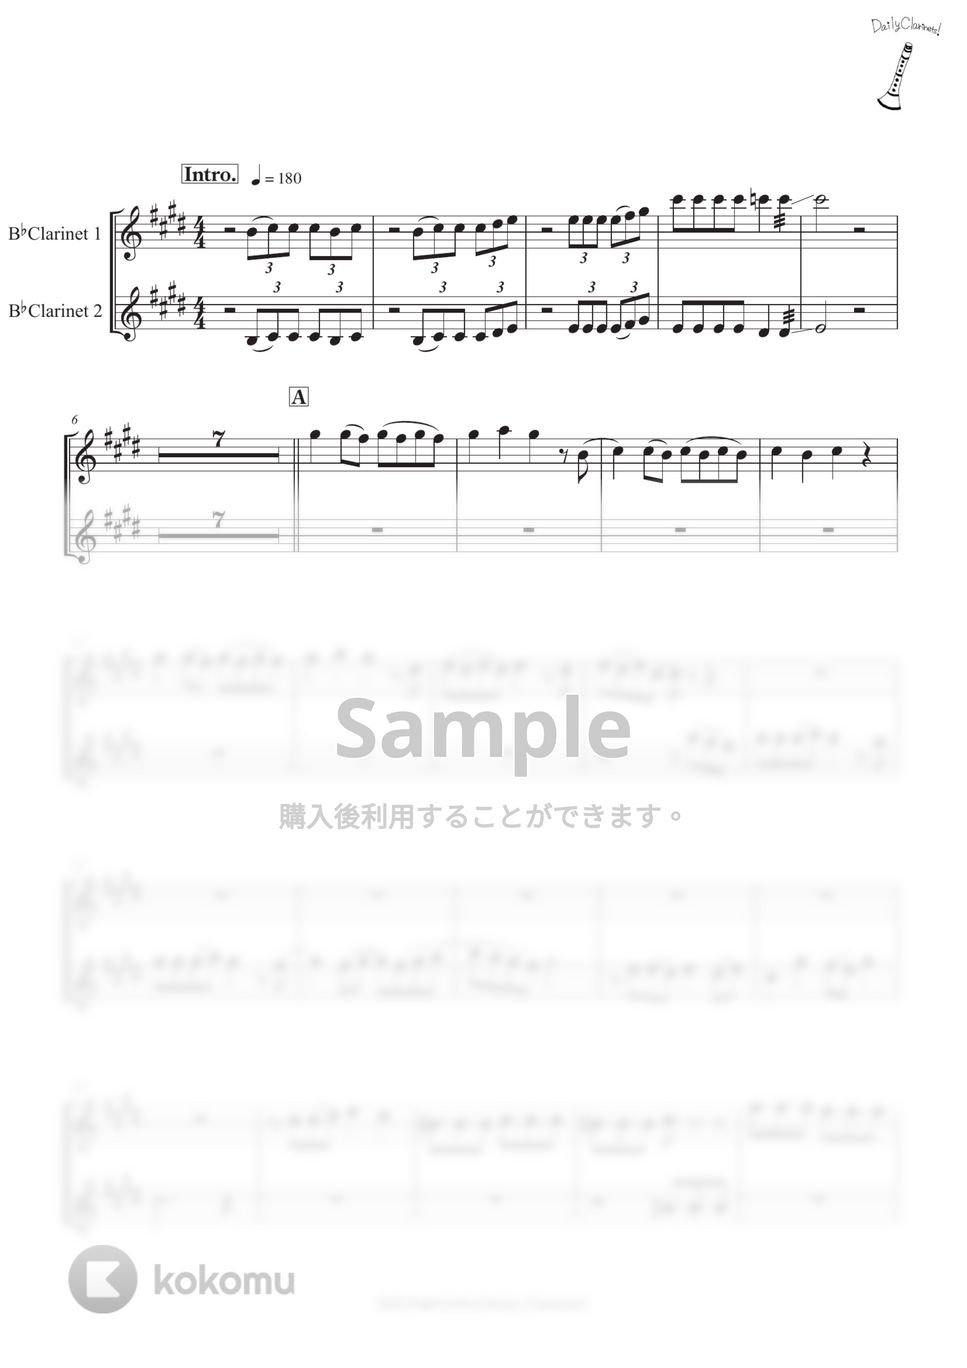 Ado - うっせぇわ (クラリネット二重奏) by SHUN&NANA Daily Clarinets!